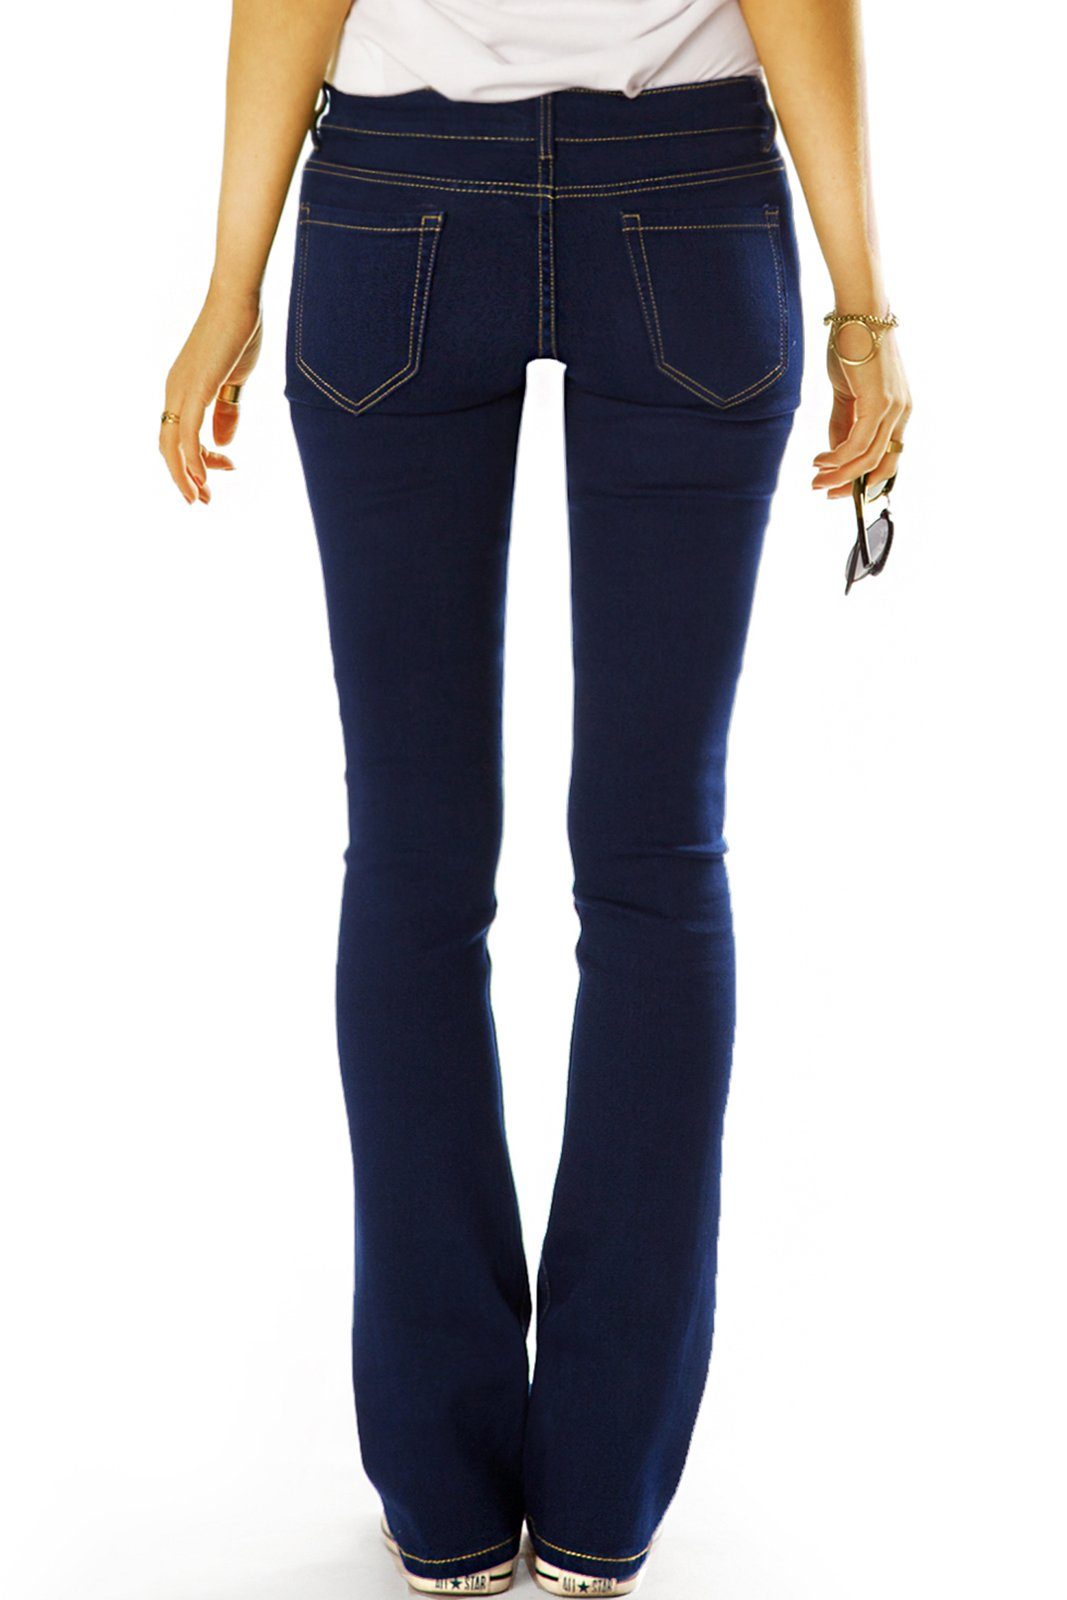 be 5-Pocket-Style Stretchjeans Jeanshose -j18g styled blau Stretch-Anteil, Bootcut-Jeans mit Hüftjeans Bootcut Damen -